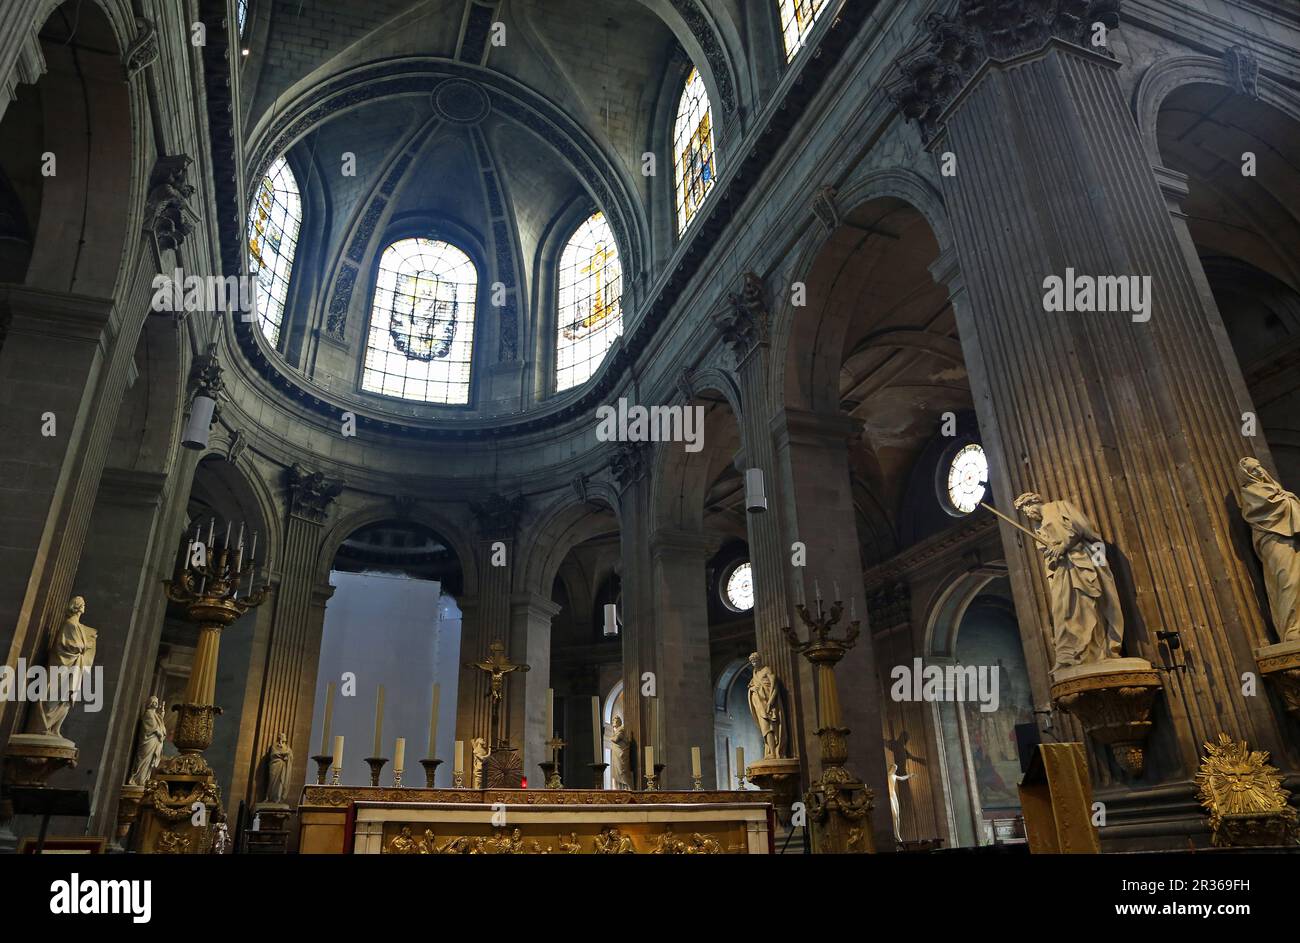 The altar of Saint-Sulpice - Paris, France Stock Photo